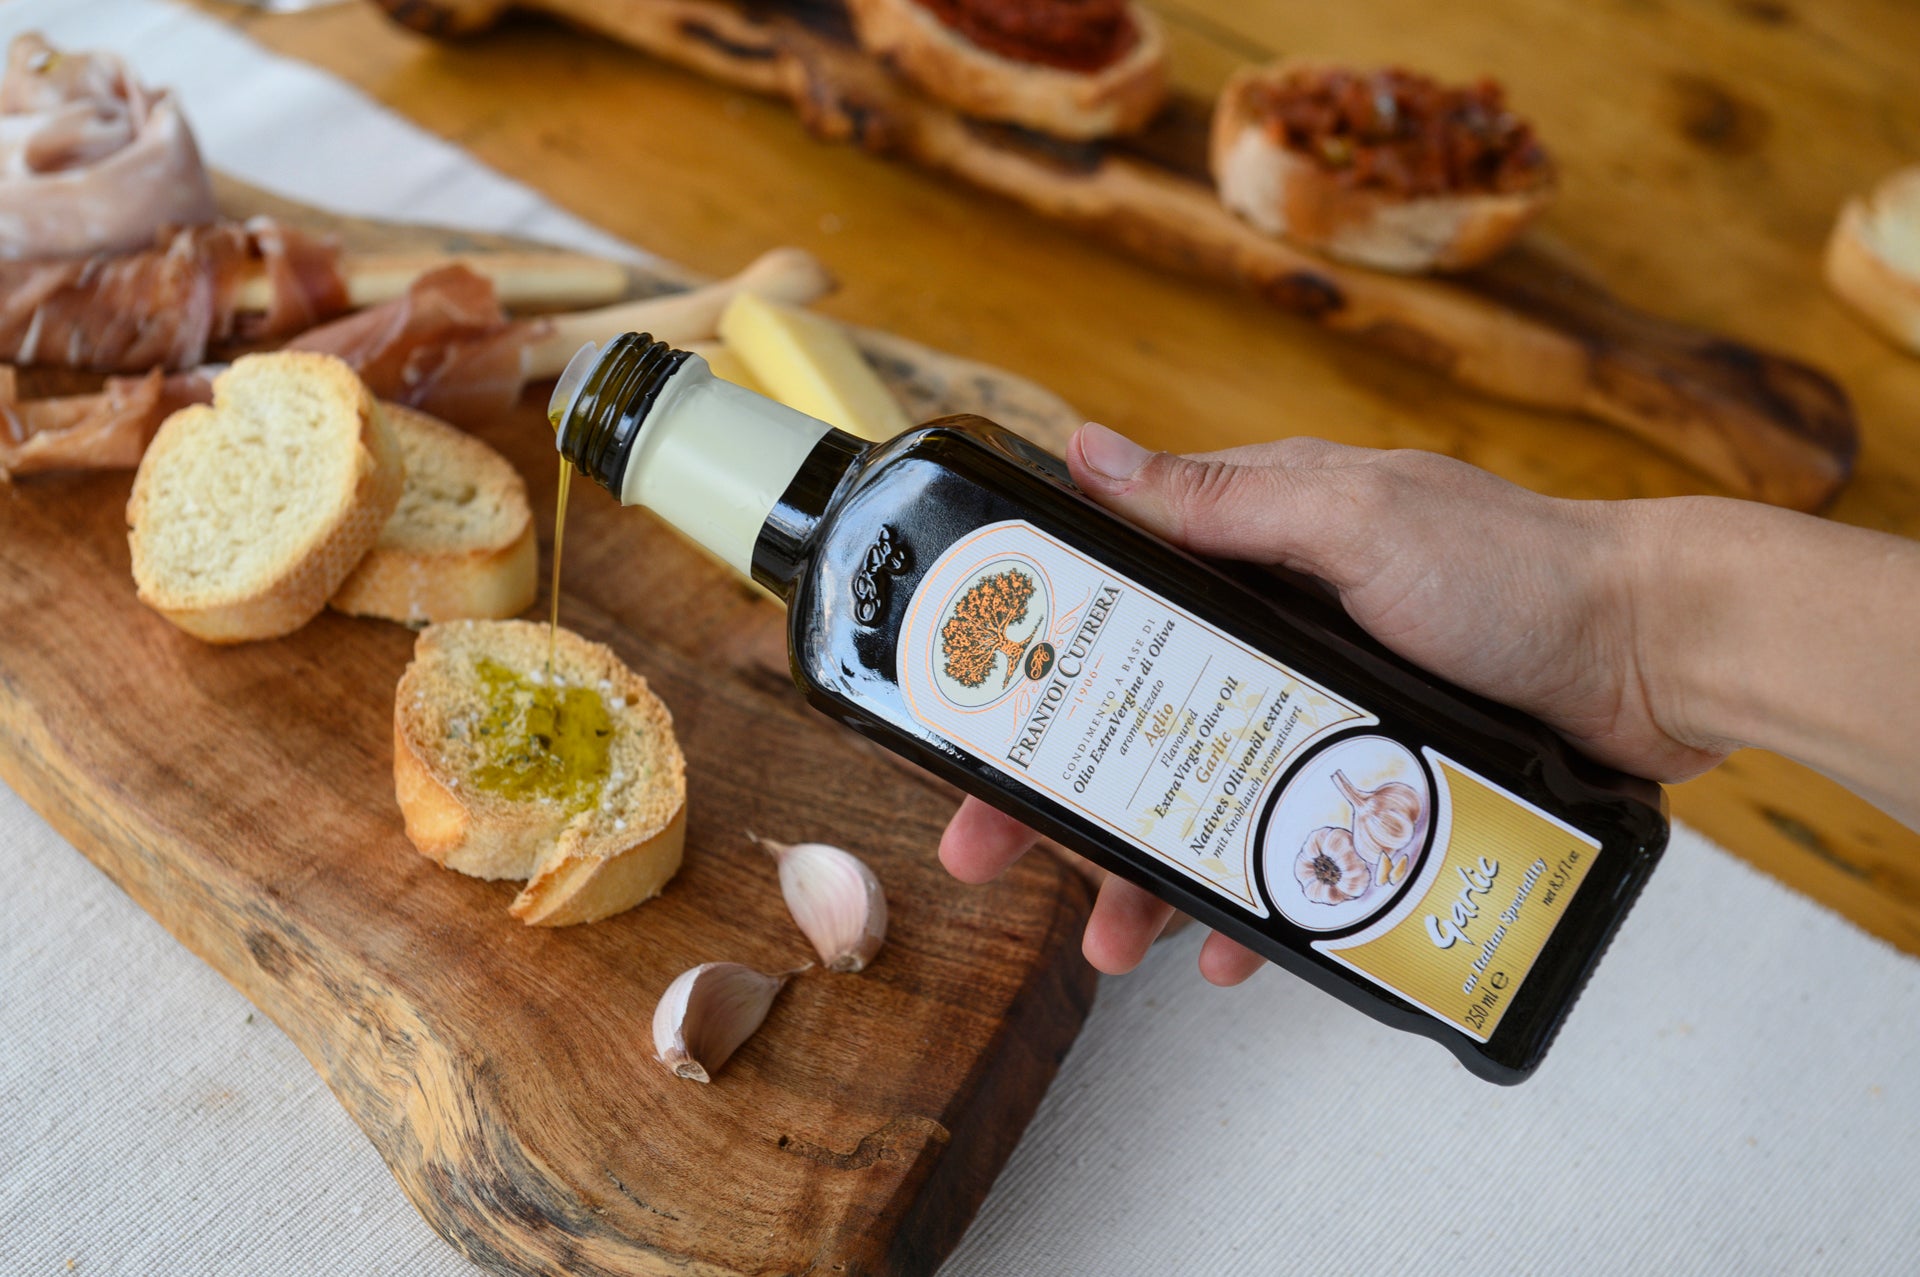 Huile d'olive extra vierge aromatisée à l'ail